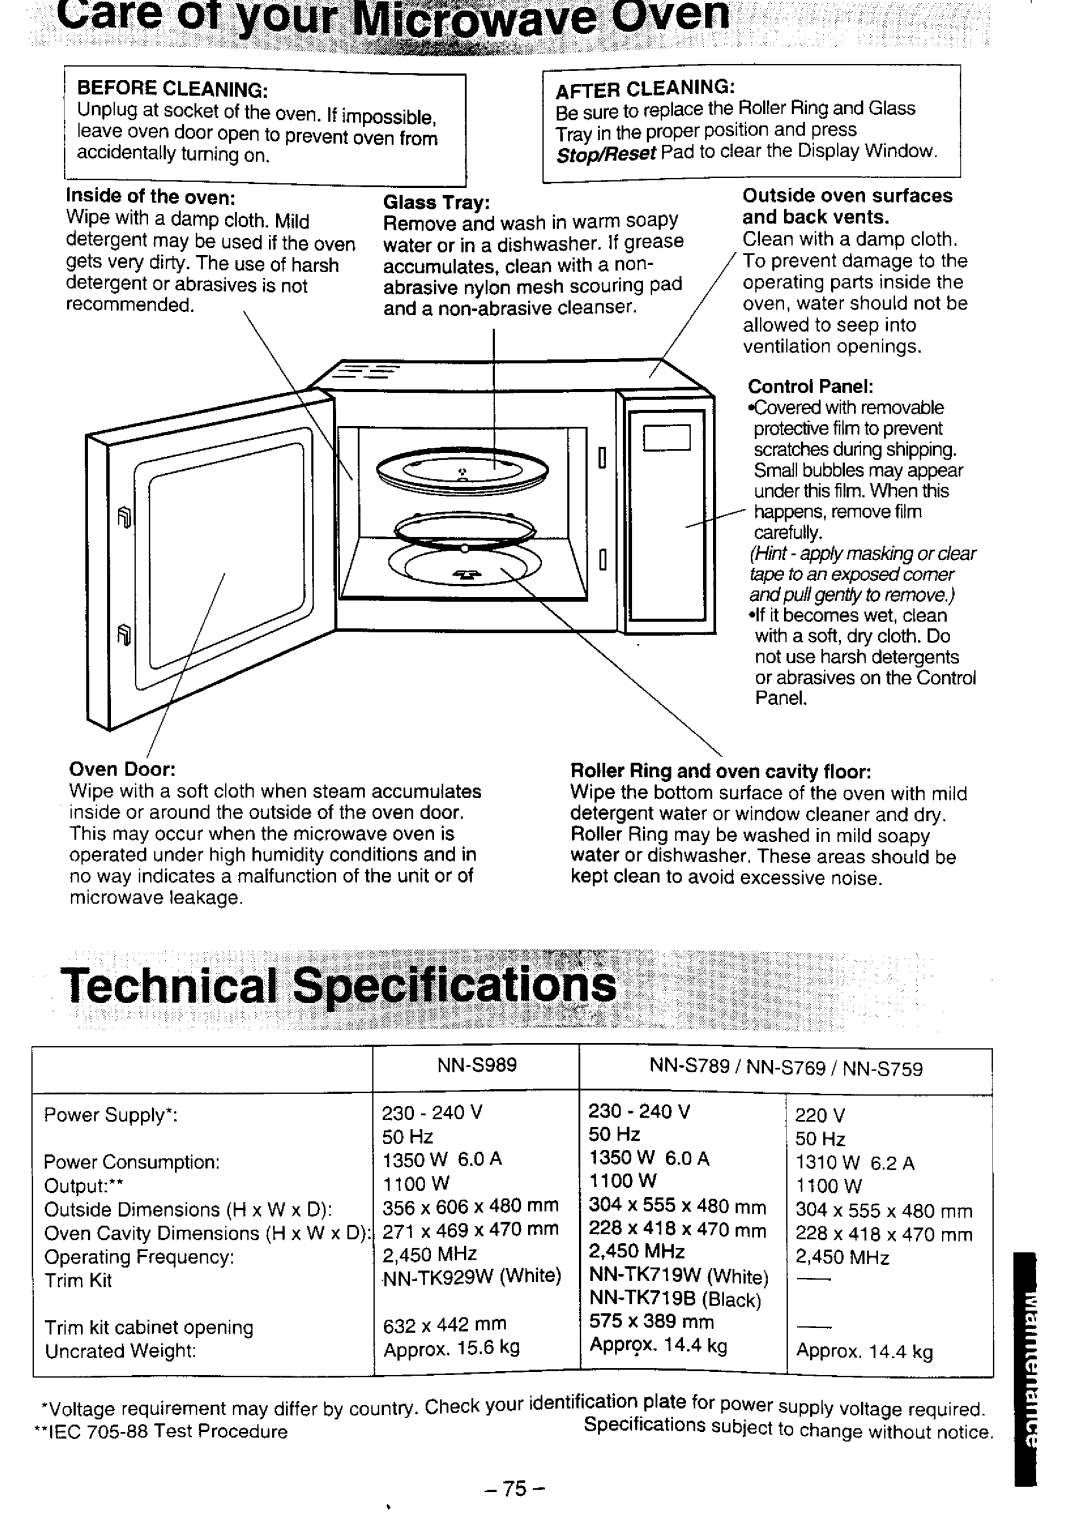 Panasonic NN-S769, NN-S759 manual 